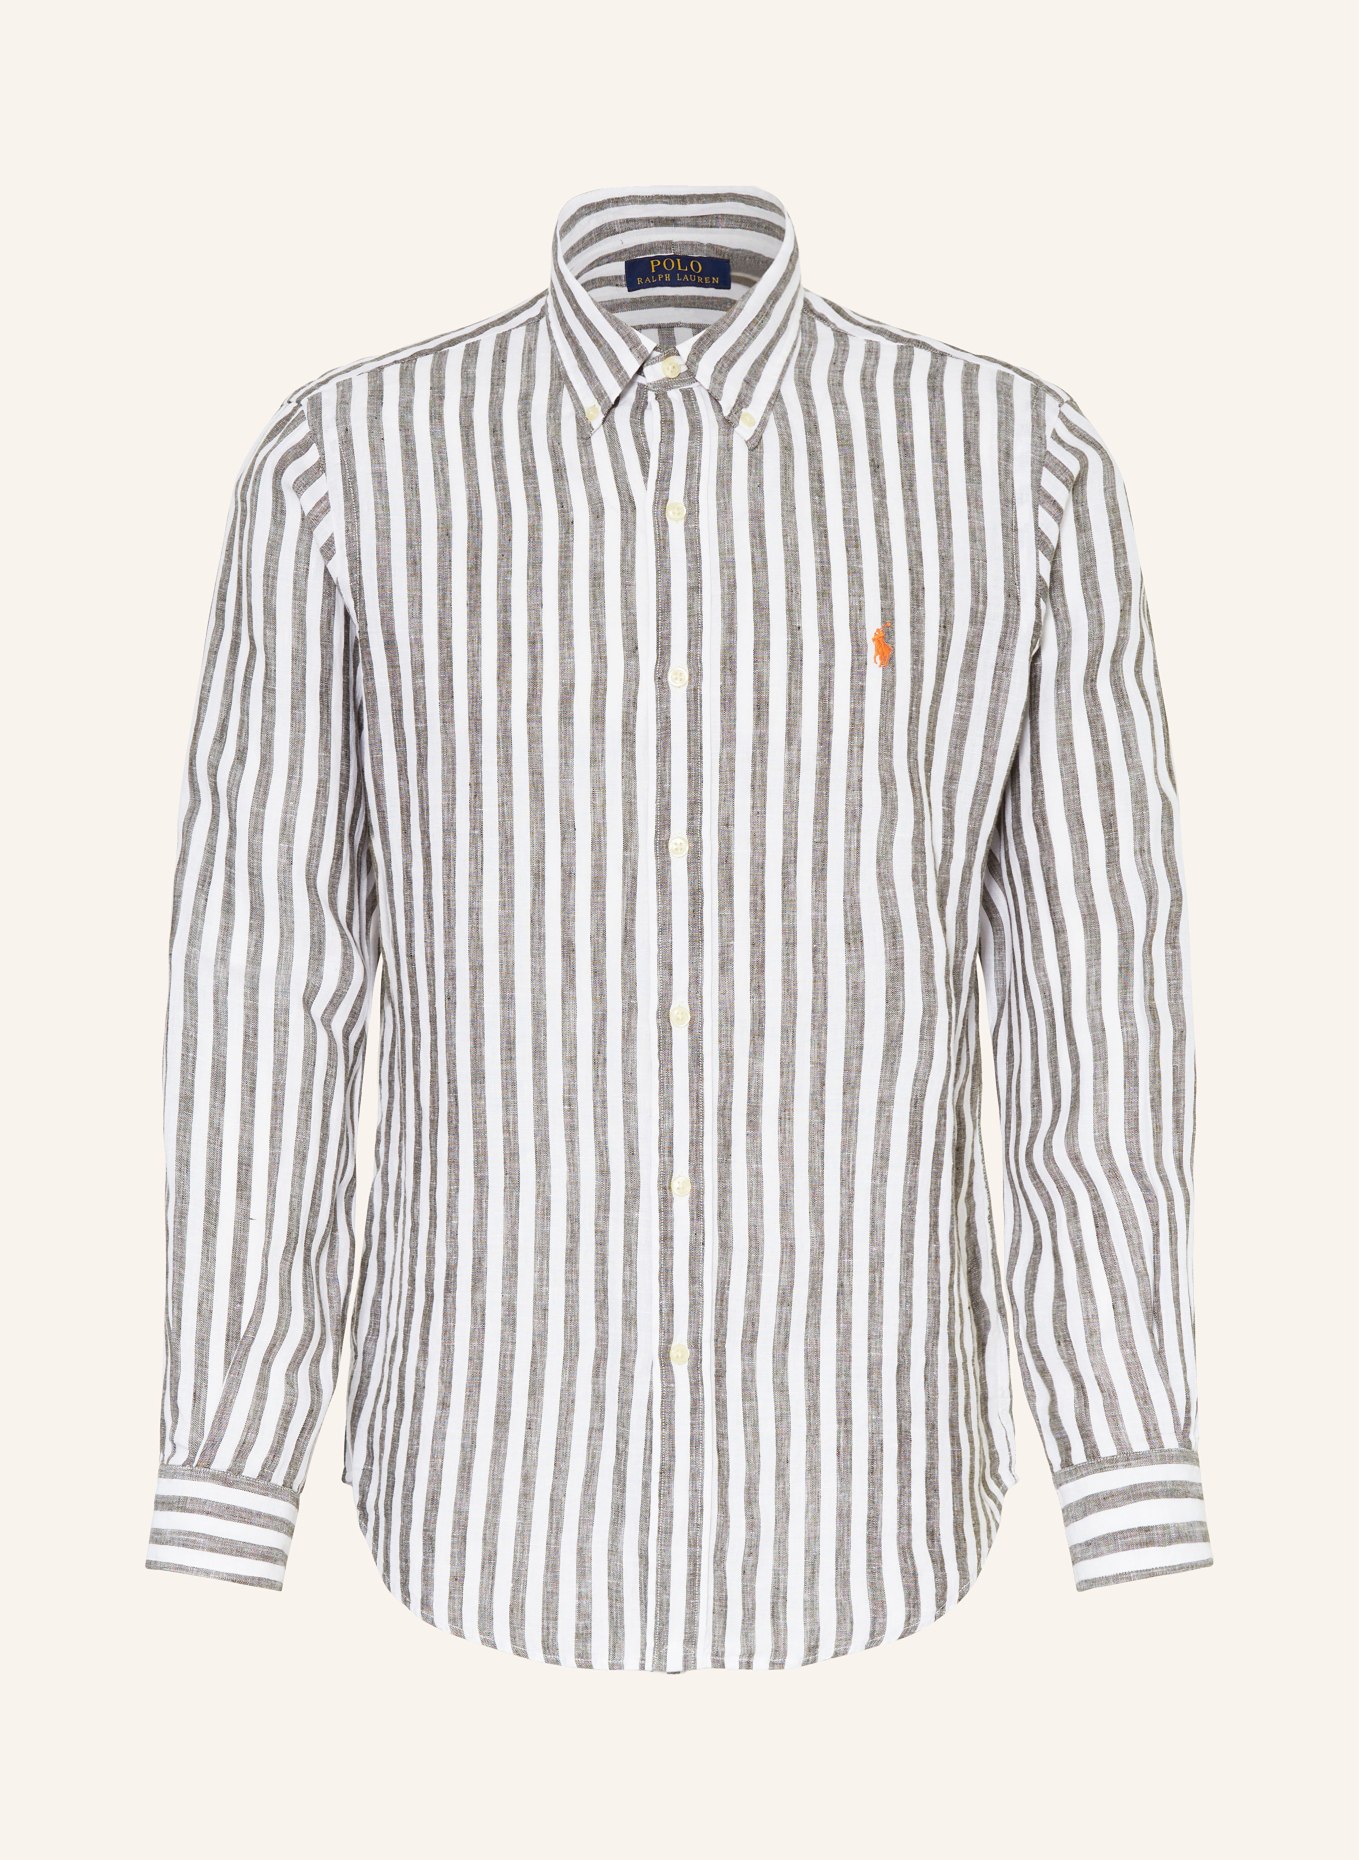 POLO RALPH LAUREN Leinenhemd Custom Fit, Farbe: OLIV/ WEISS (Bild 1)